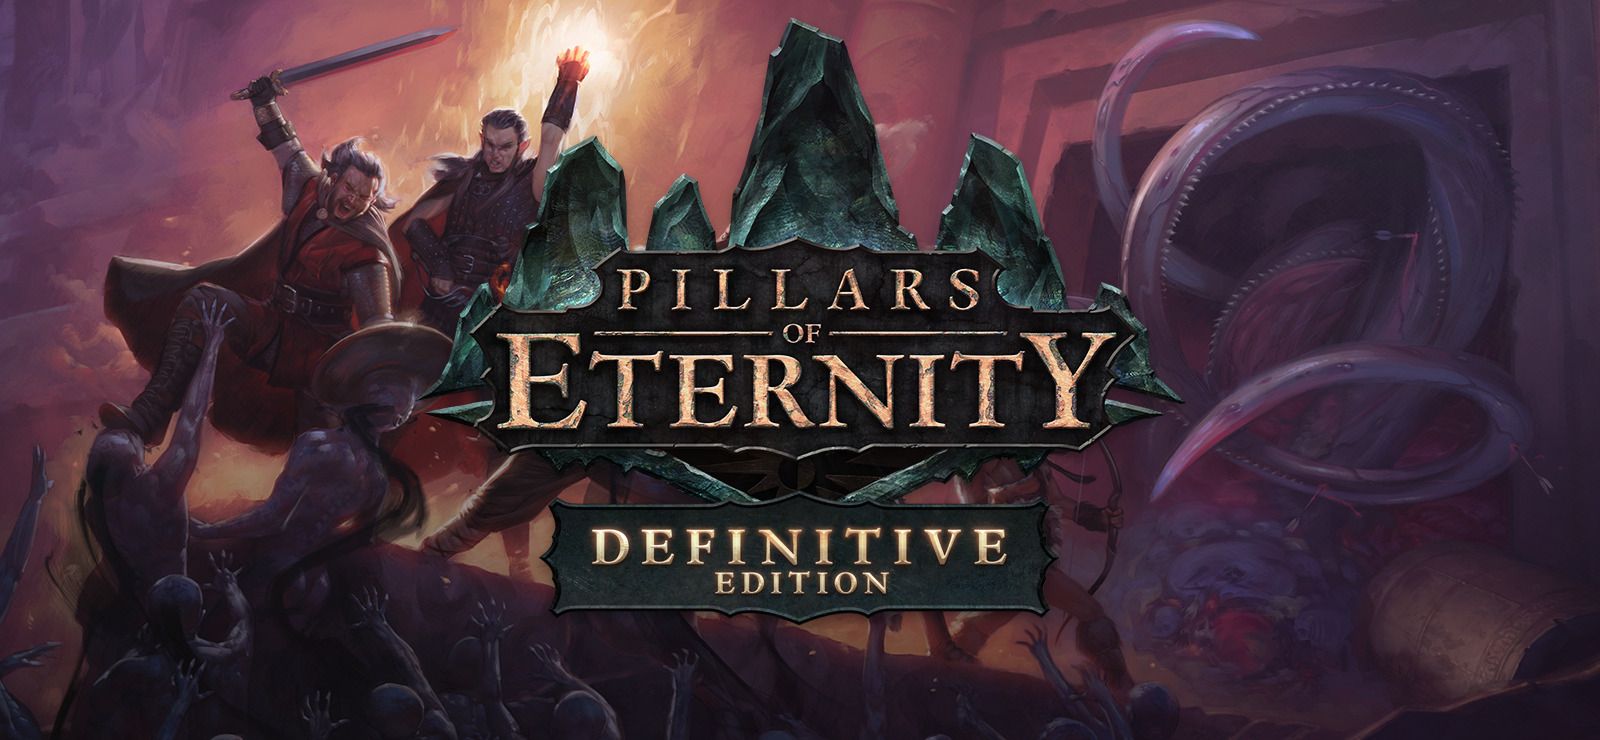 Pillars of Eternity: Definitive Edition on GOG.com